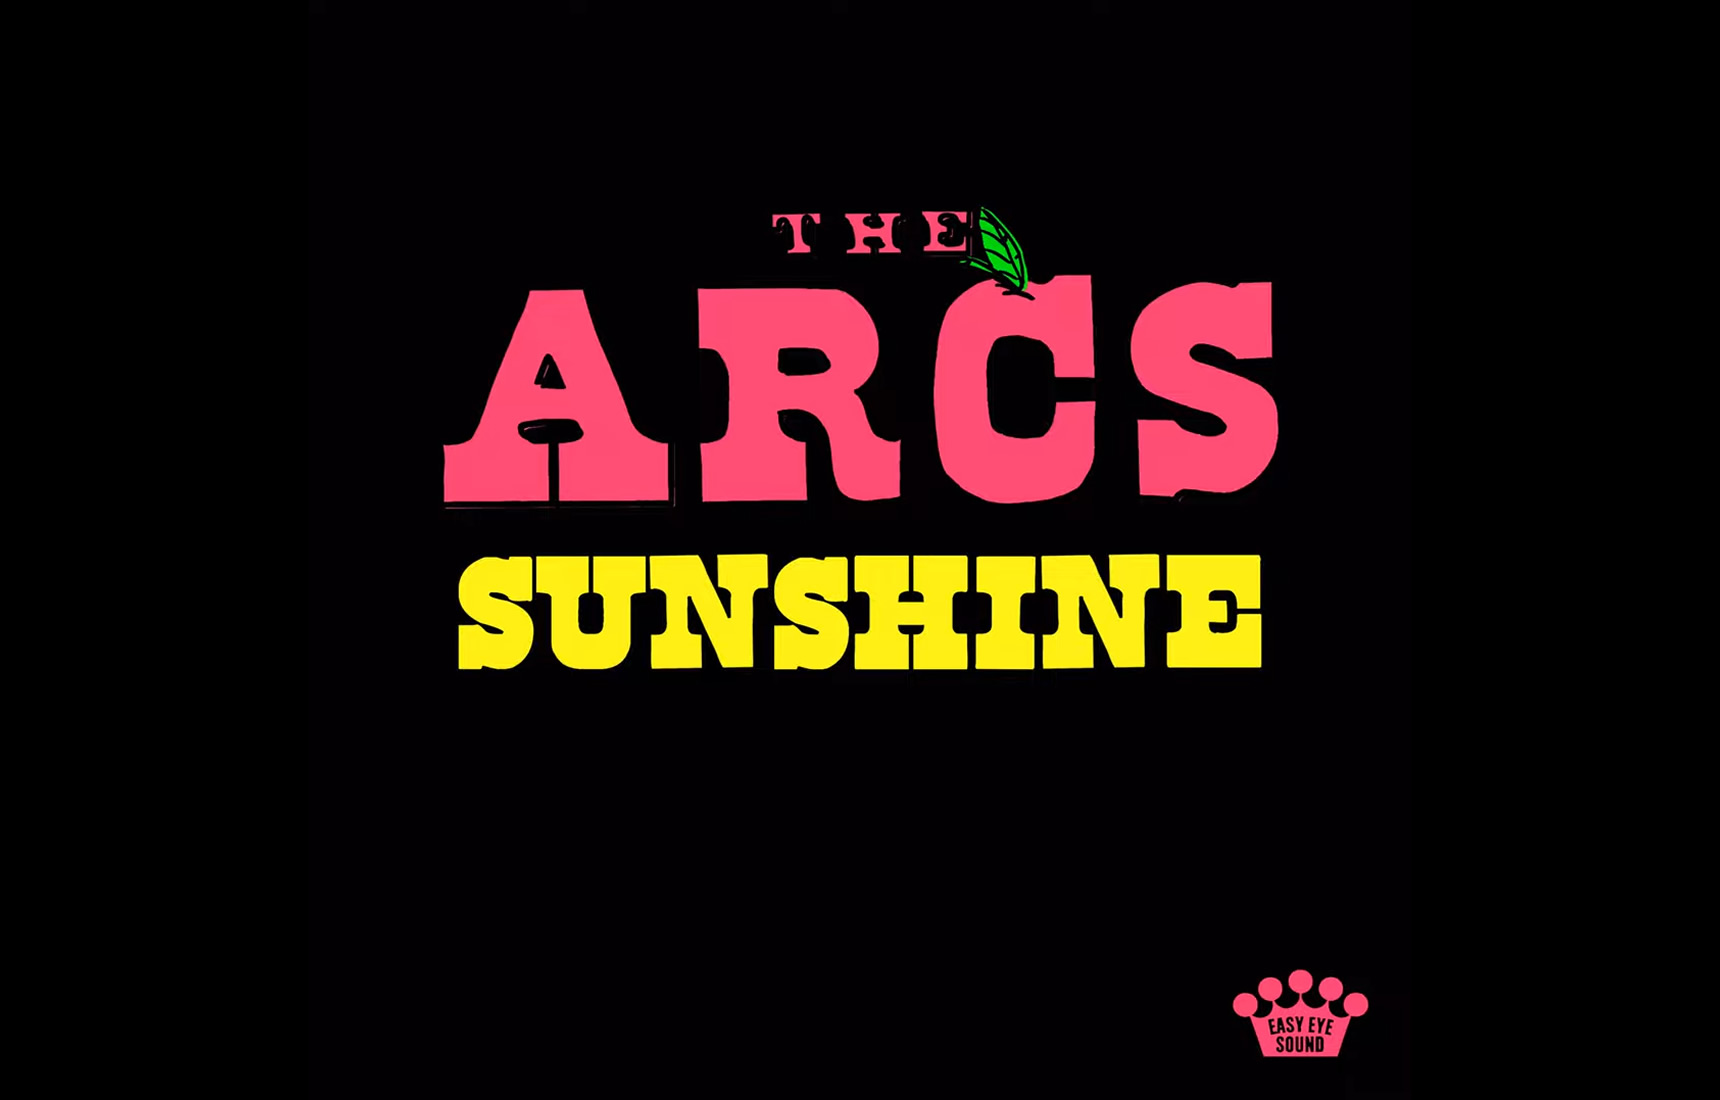 The Arcs Sunshine